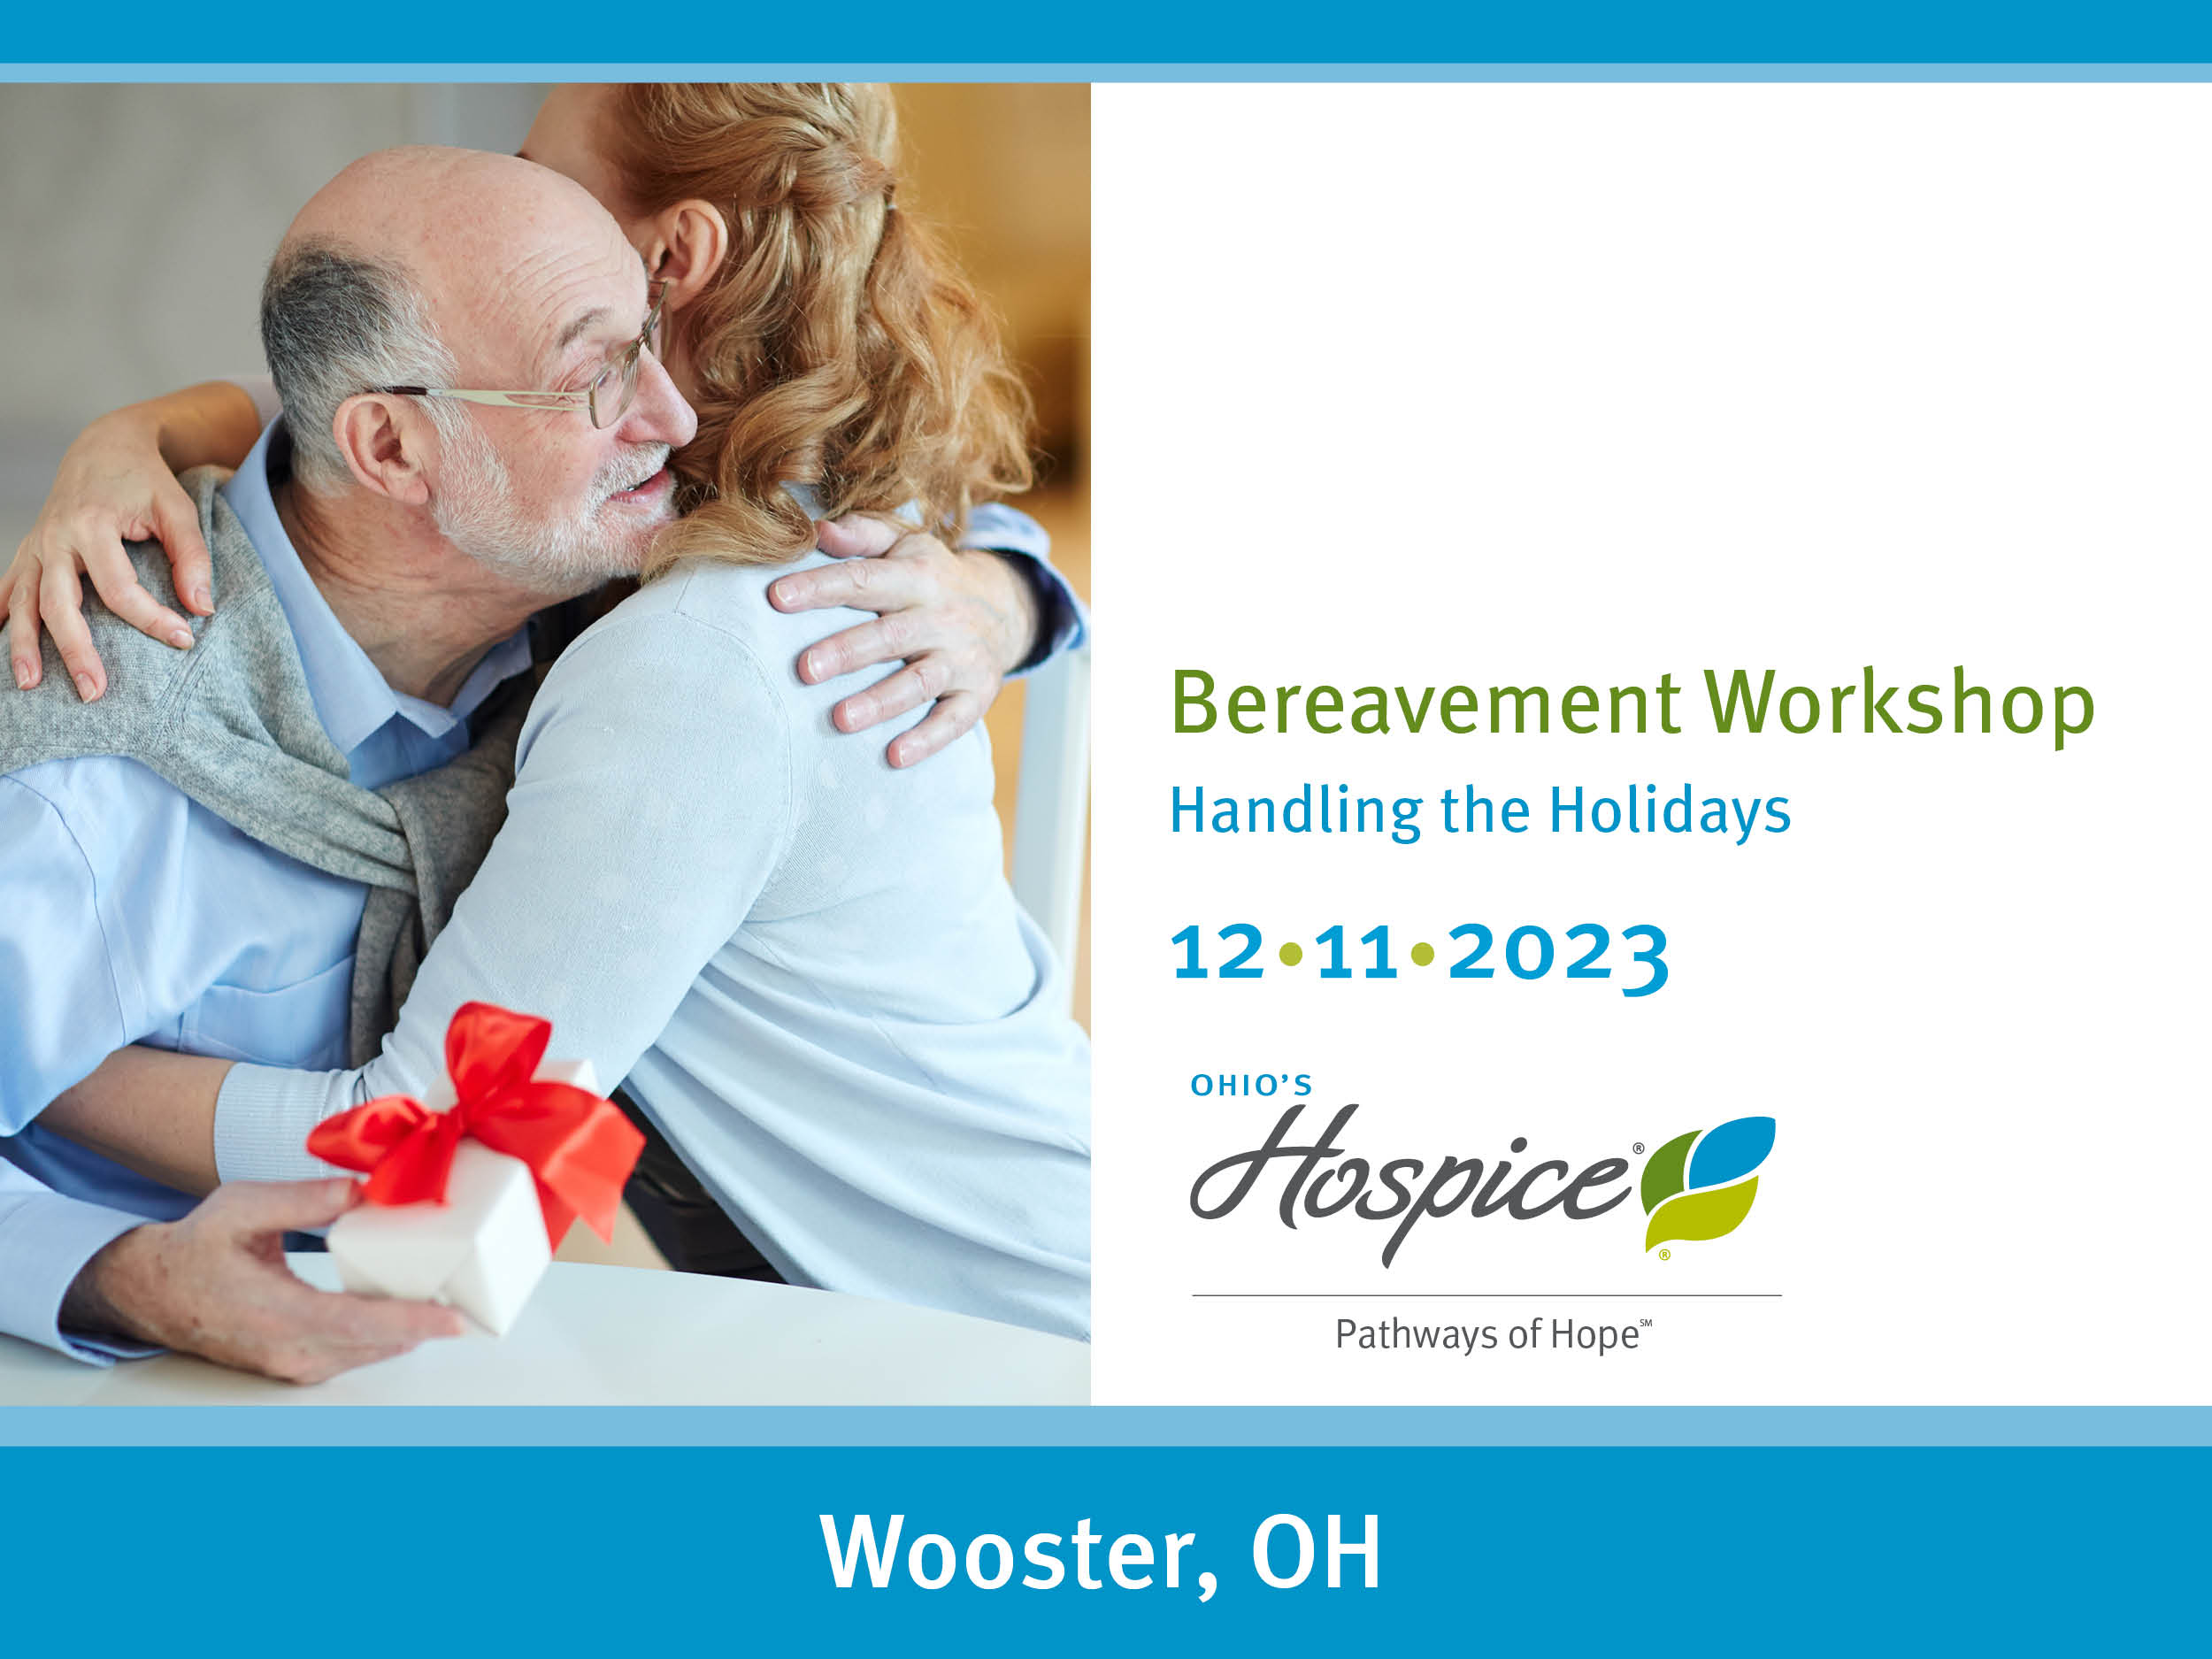 Bereavement Workshop Handling the Holidays 12/11/2023 Ohio's Hospice Pathways of Hope